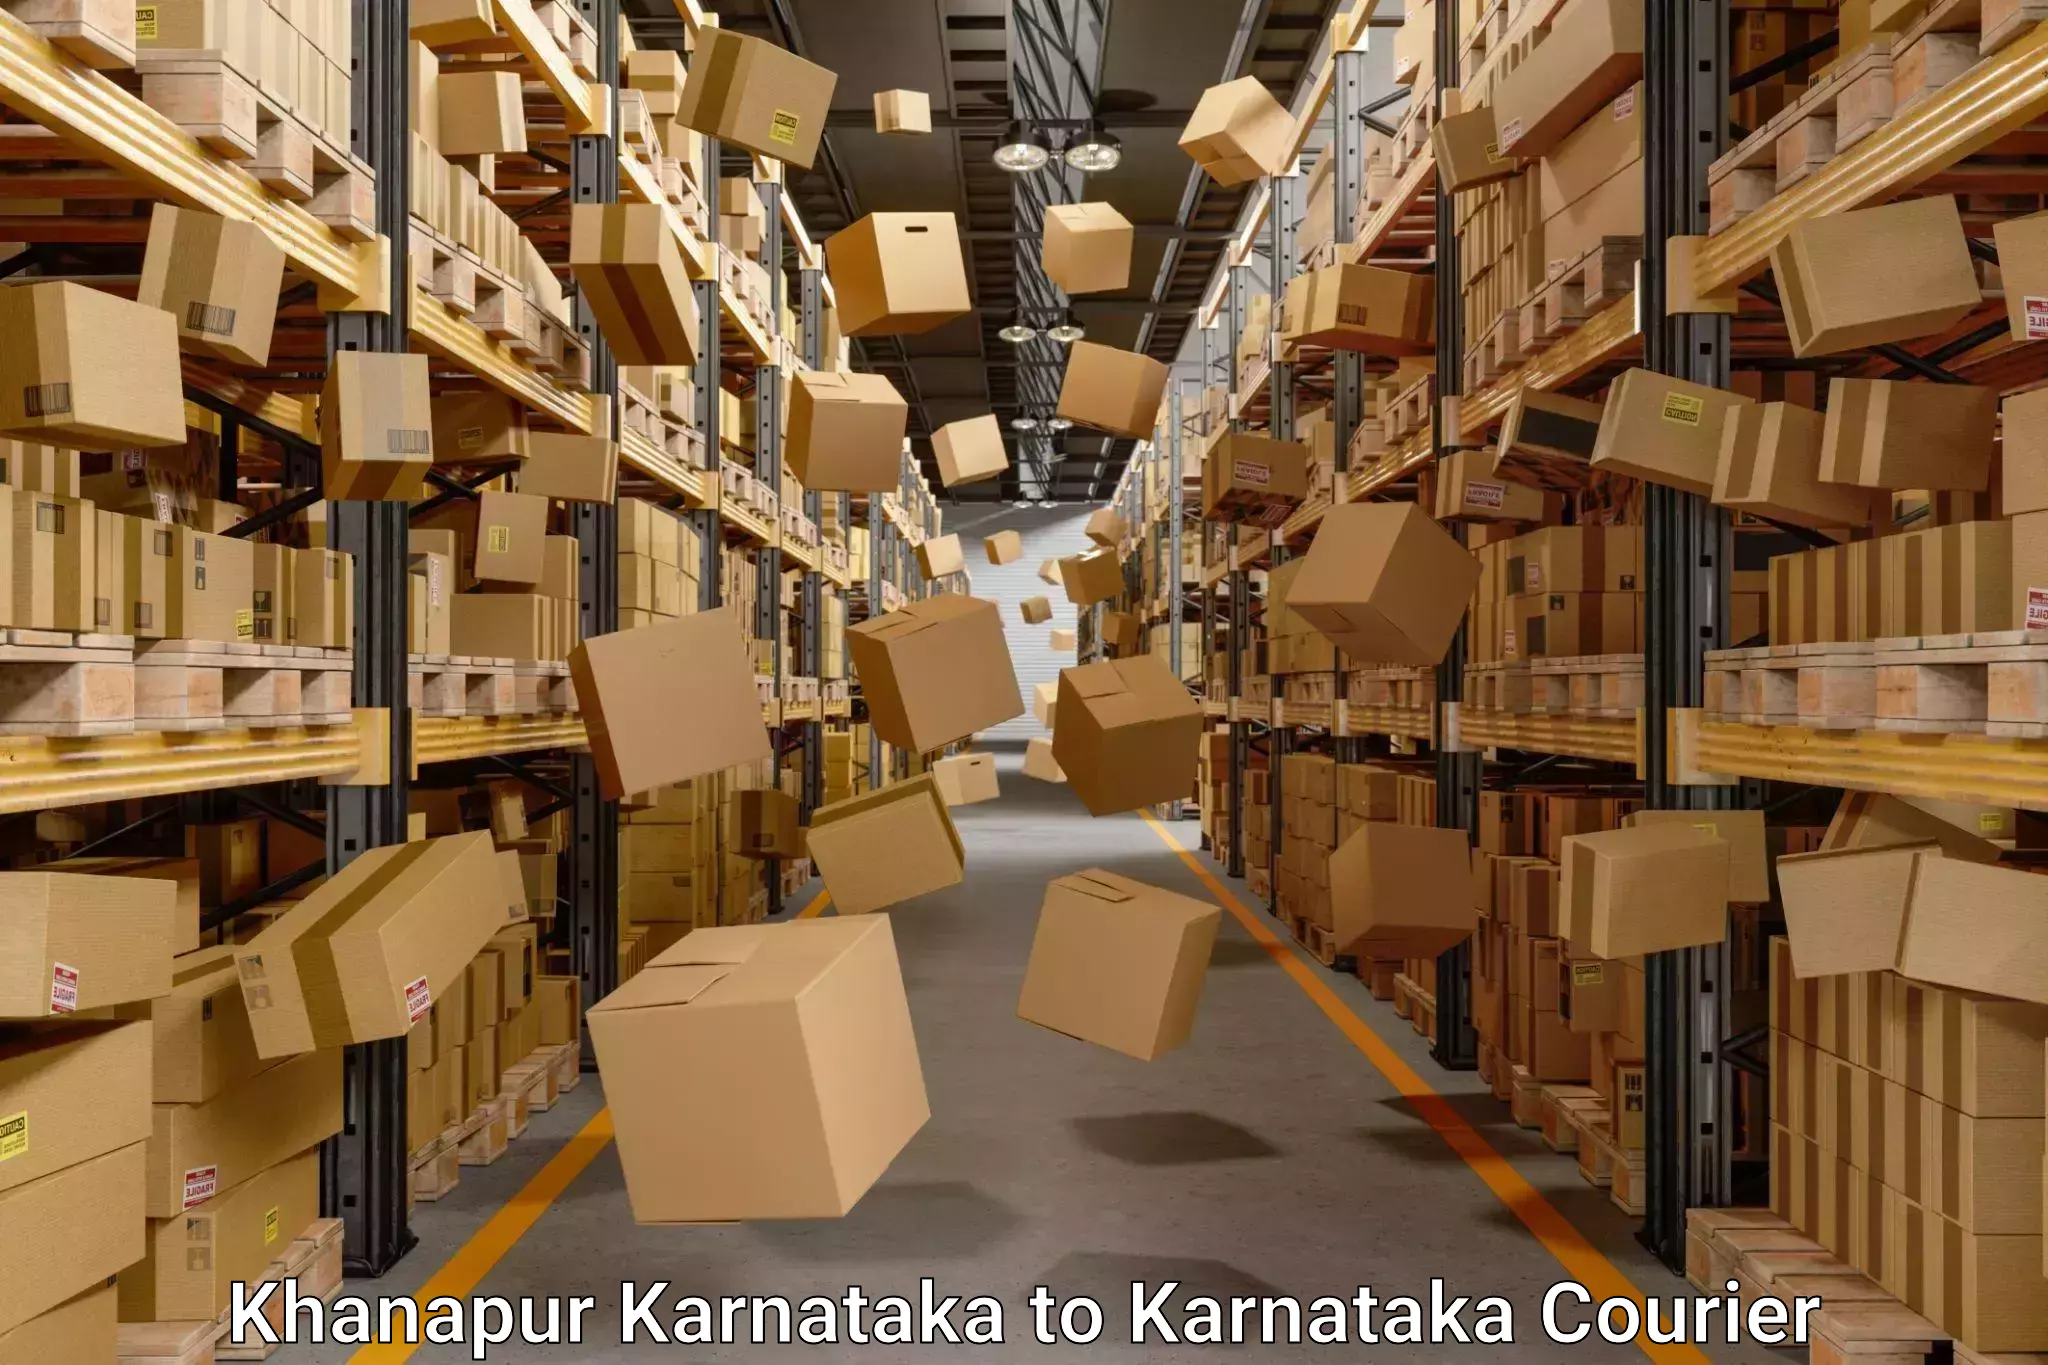 Professional moving company Khanapur Karnataka to Mangalore